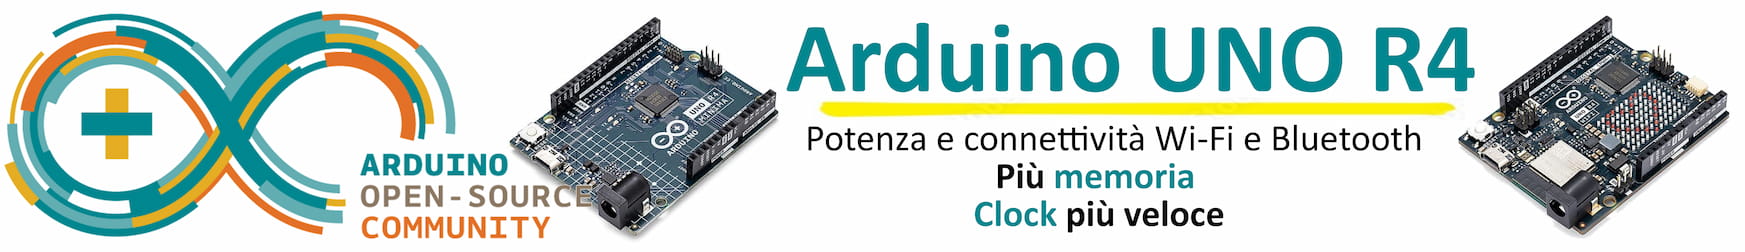 Arduino UNO R4